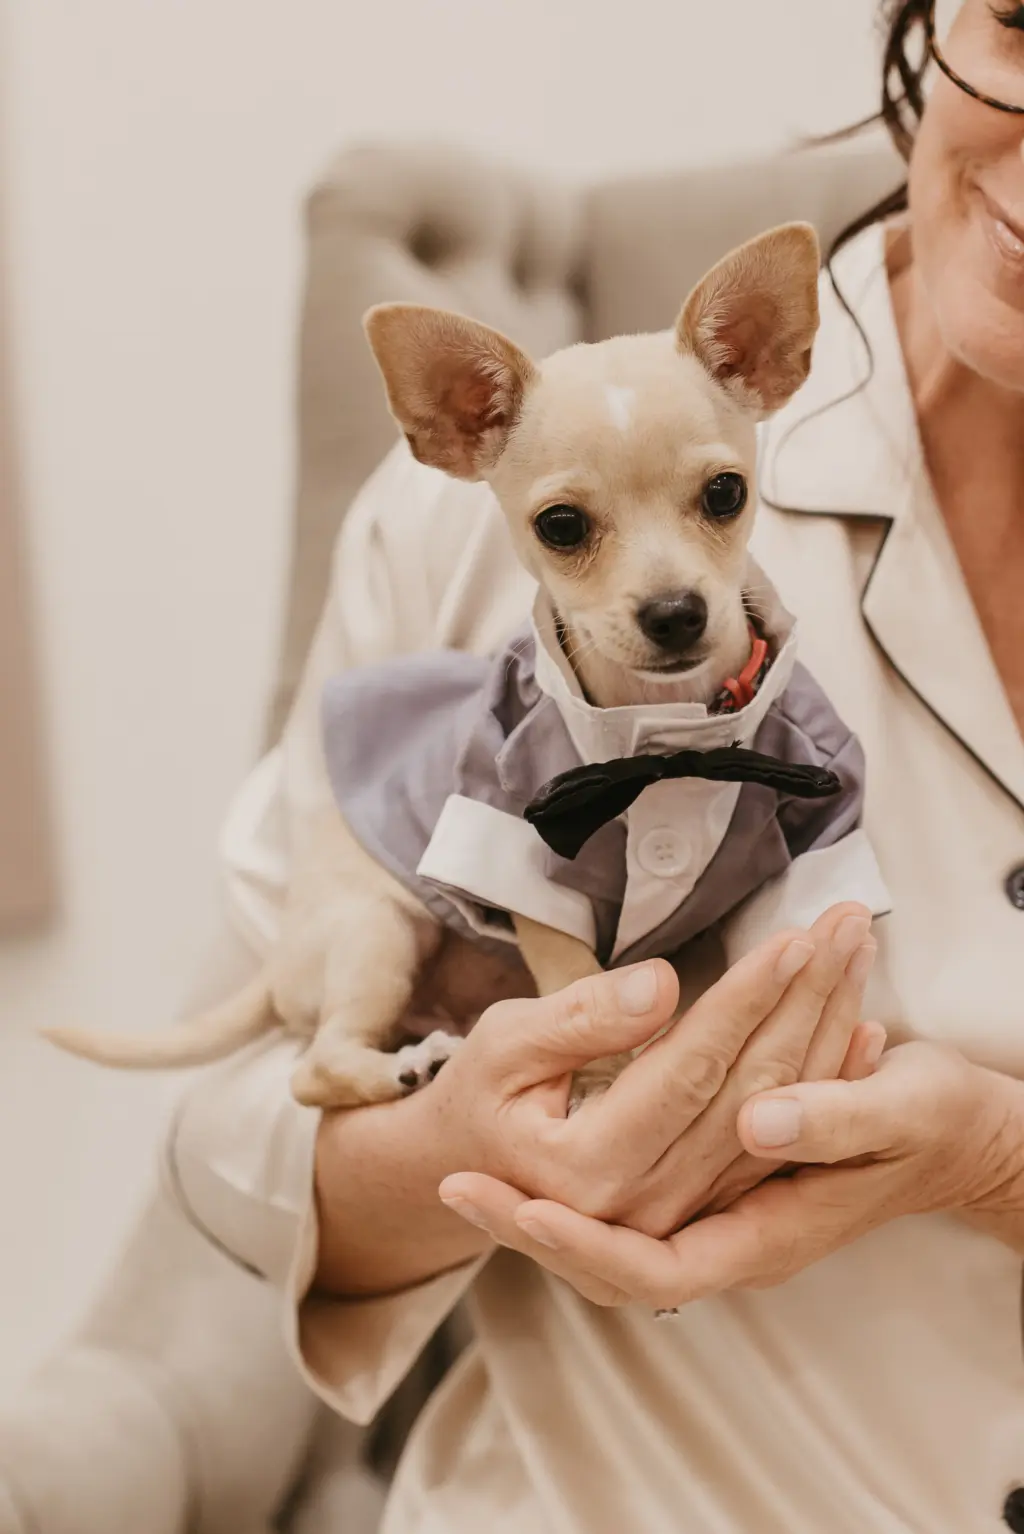 Dog in Tuxedo for Owner's Wedding Day Ideas